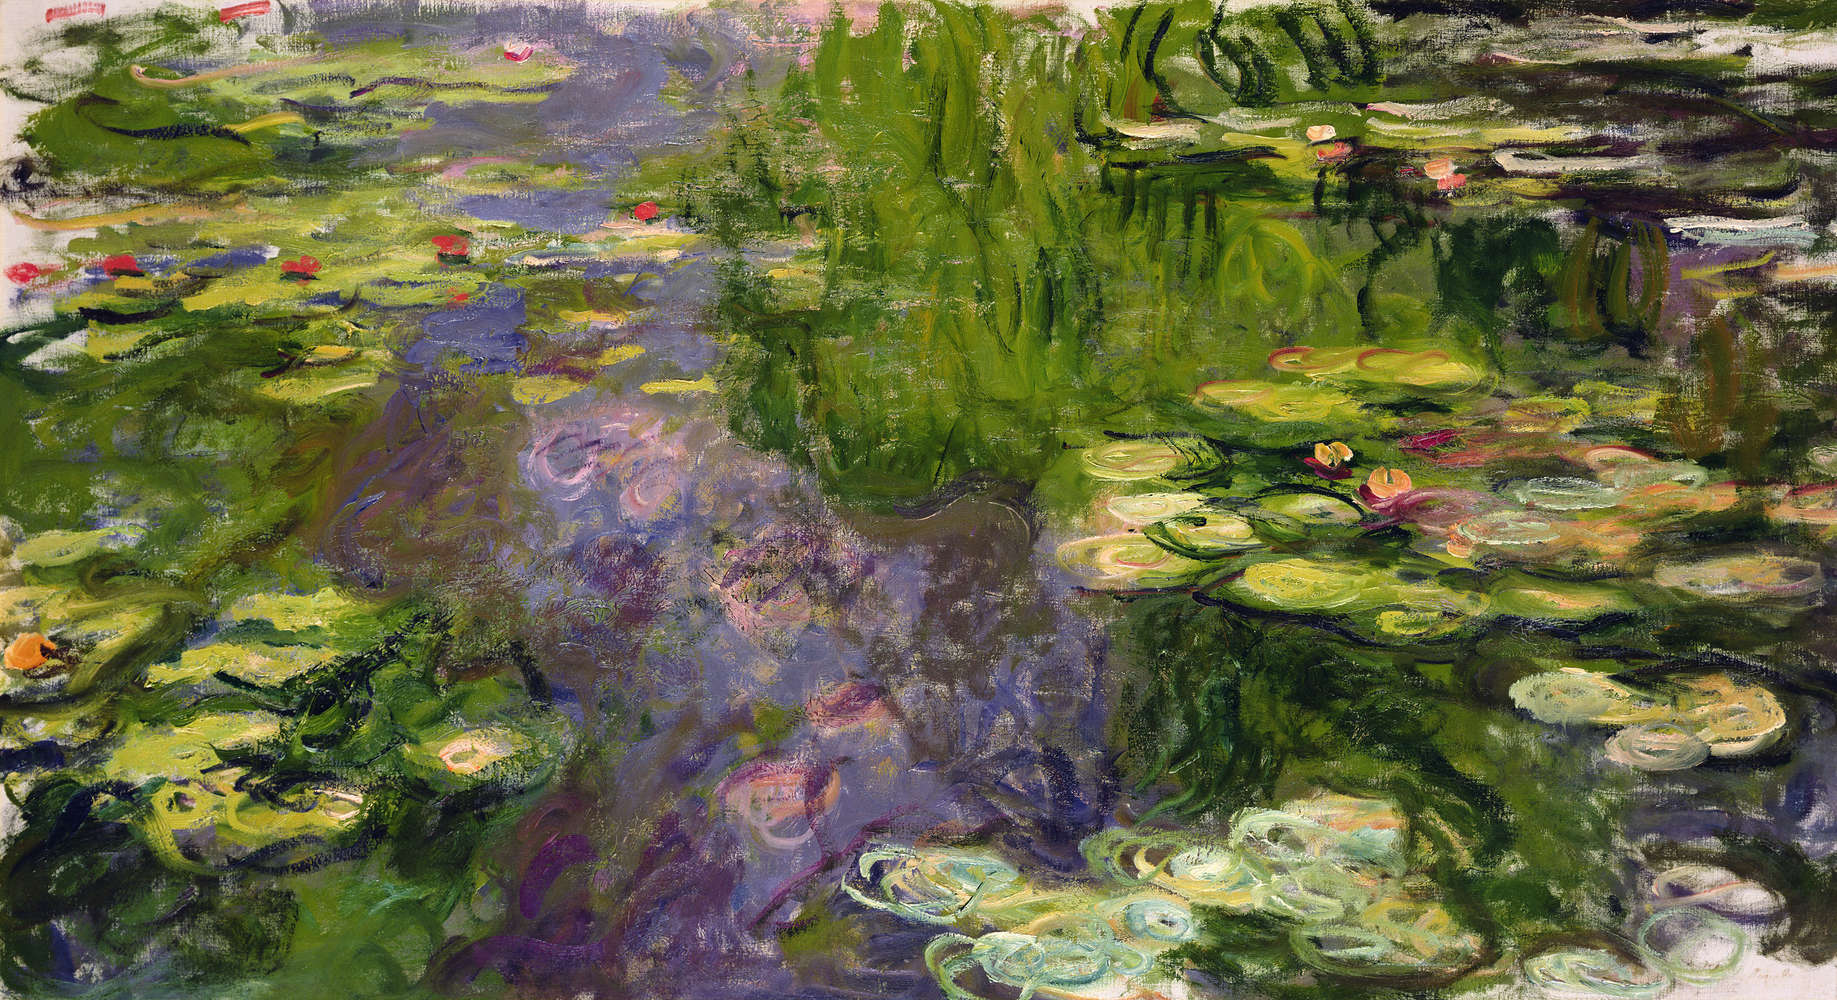             Ninfee" murale di Claude Monet
        